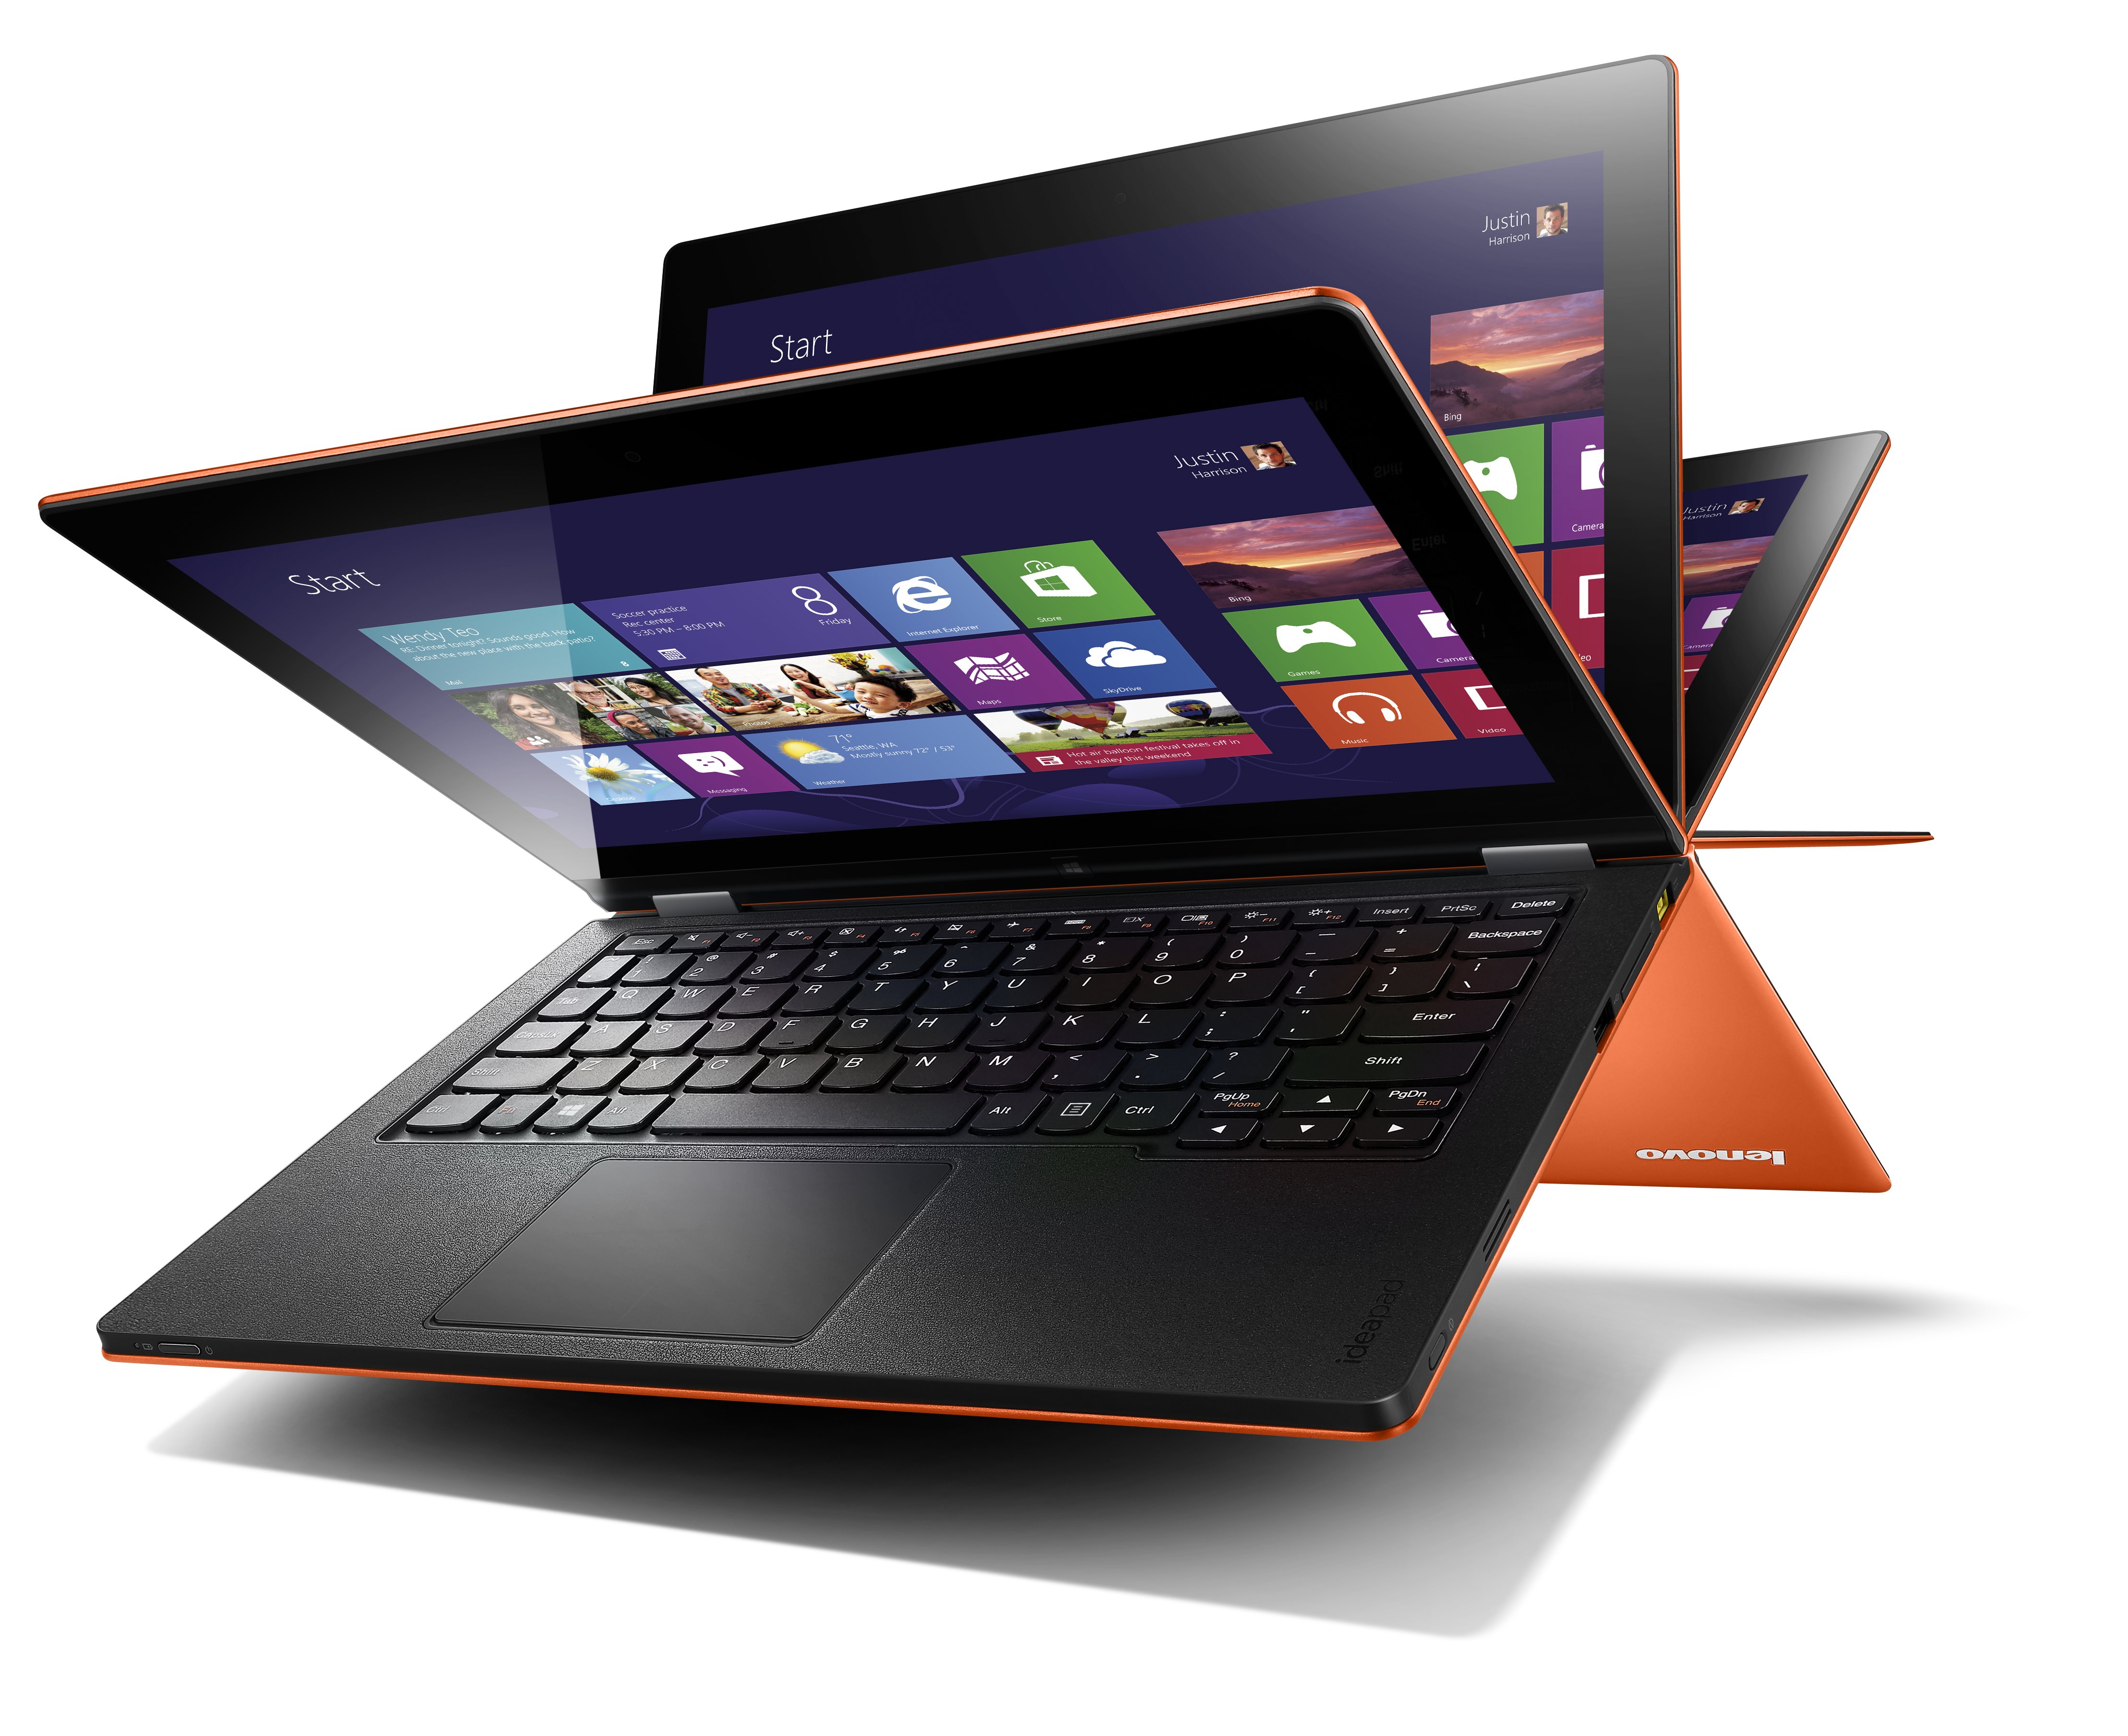 Lenovo IdeaPad Yoga 13: The Tablet Crossover